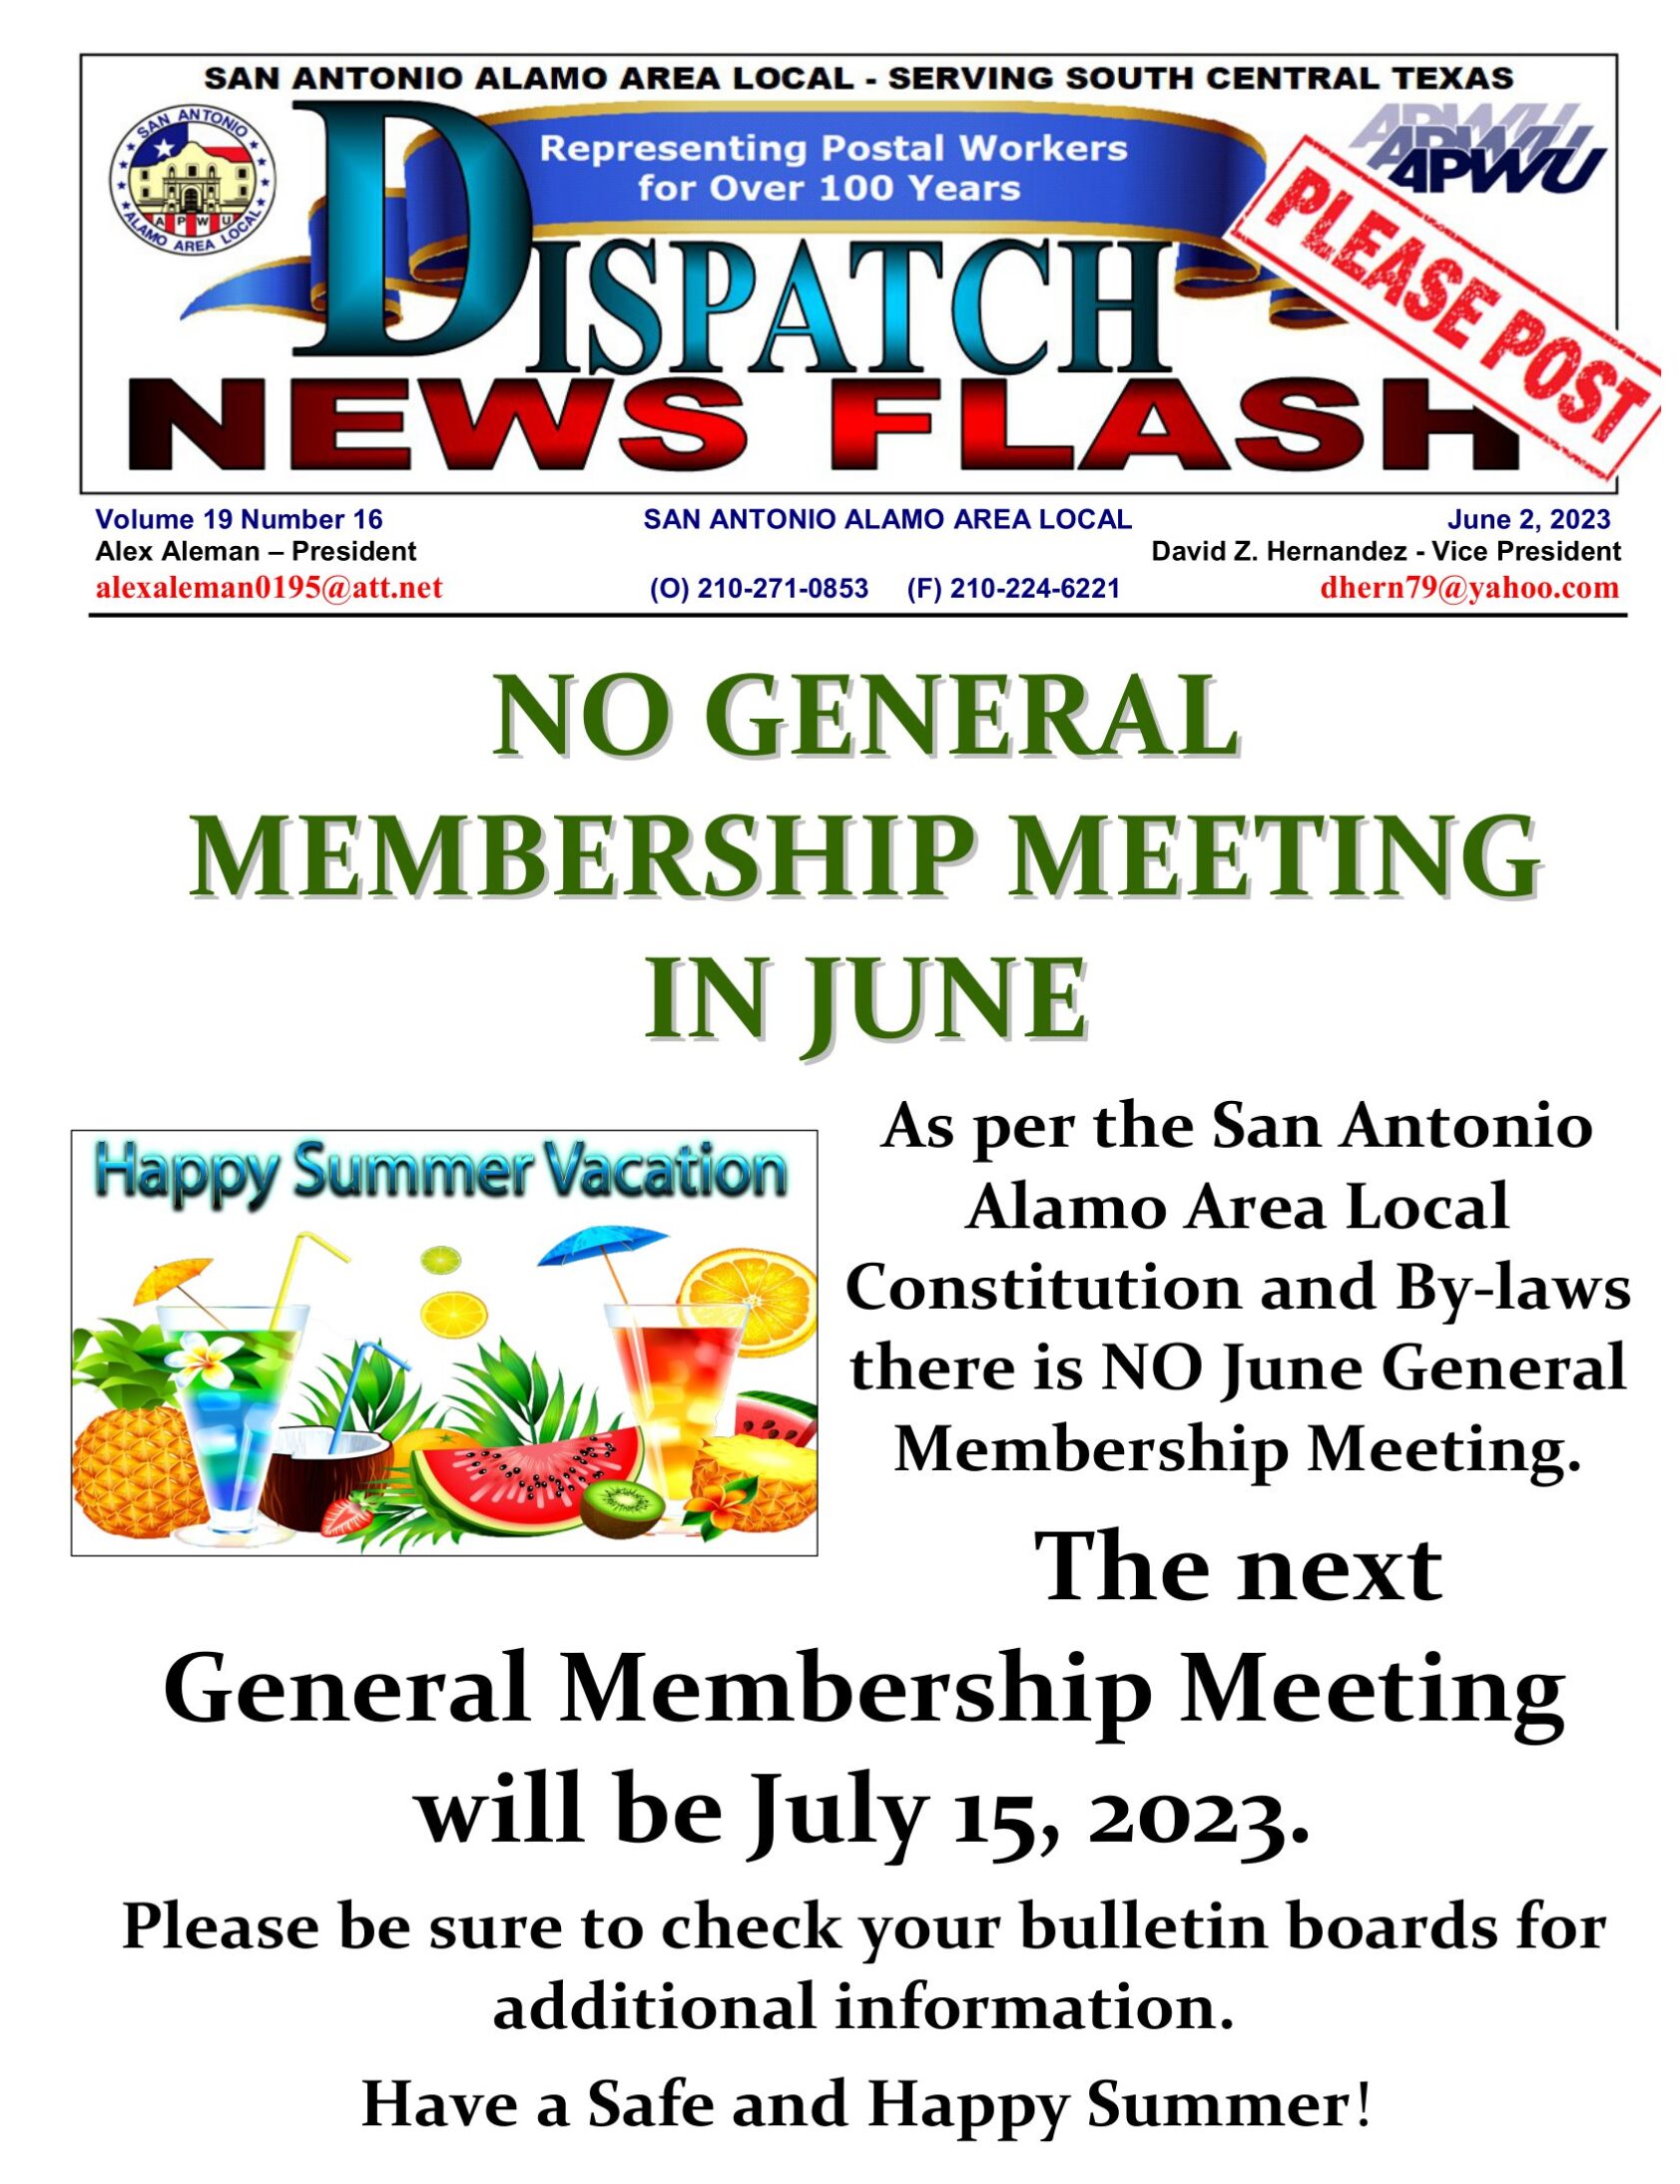 NewsFlash 19-16 No Membership Meeting in June - 